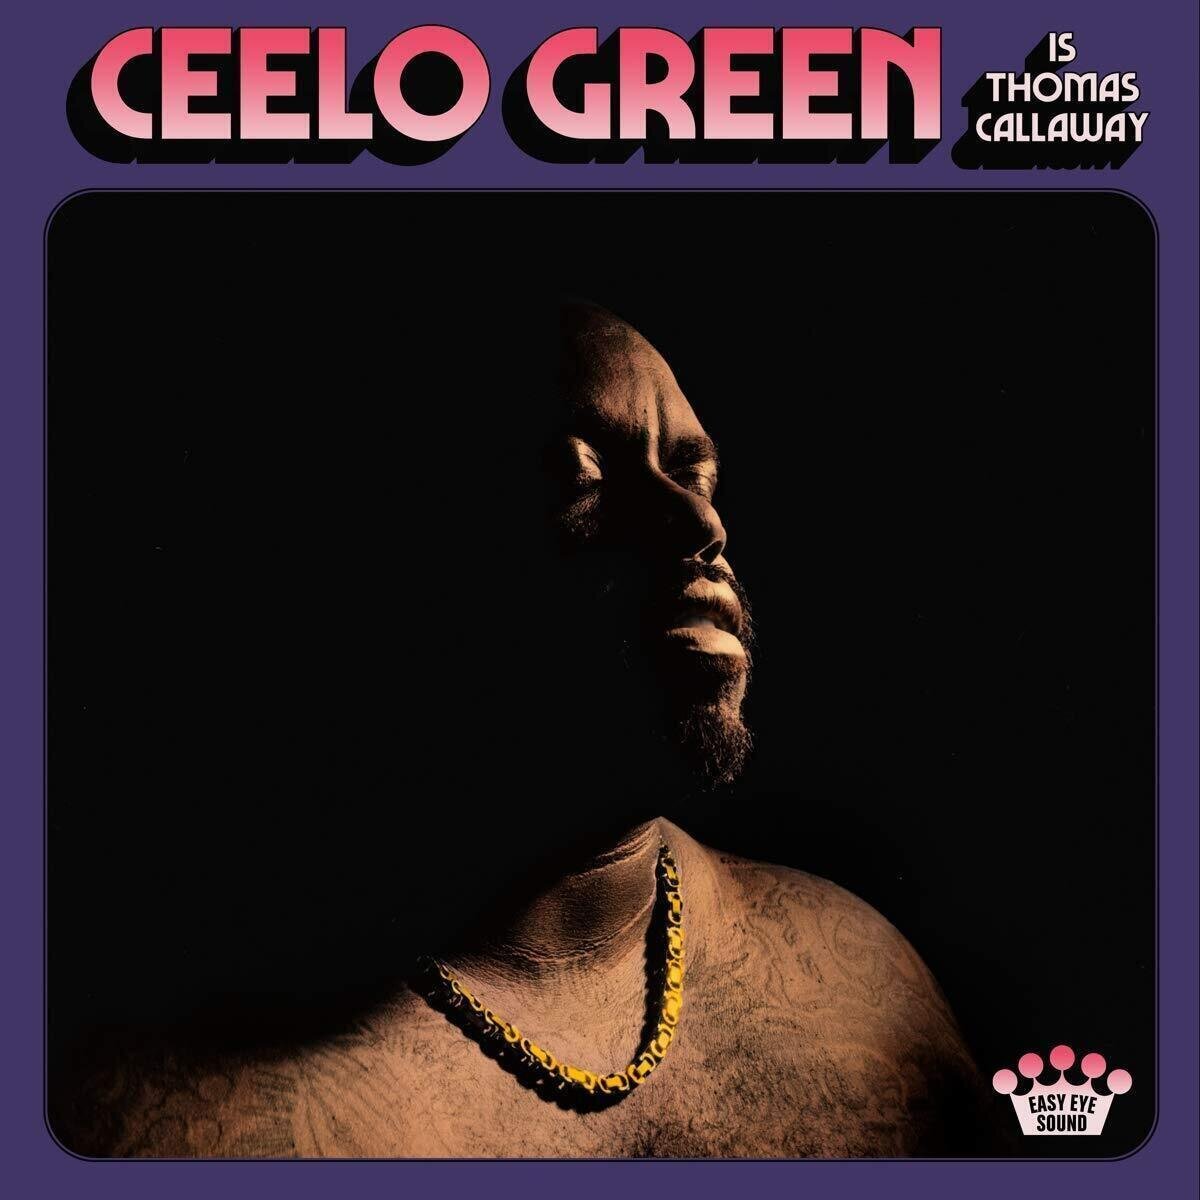 Vinyl Record CeeLo Green - Ceelo Green Is Thomas Callaway (LP)